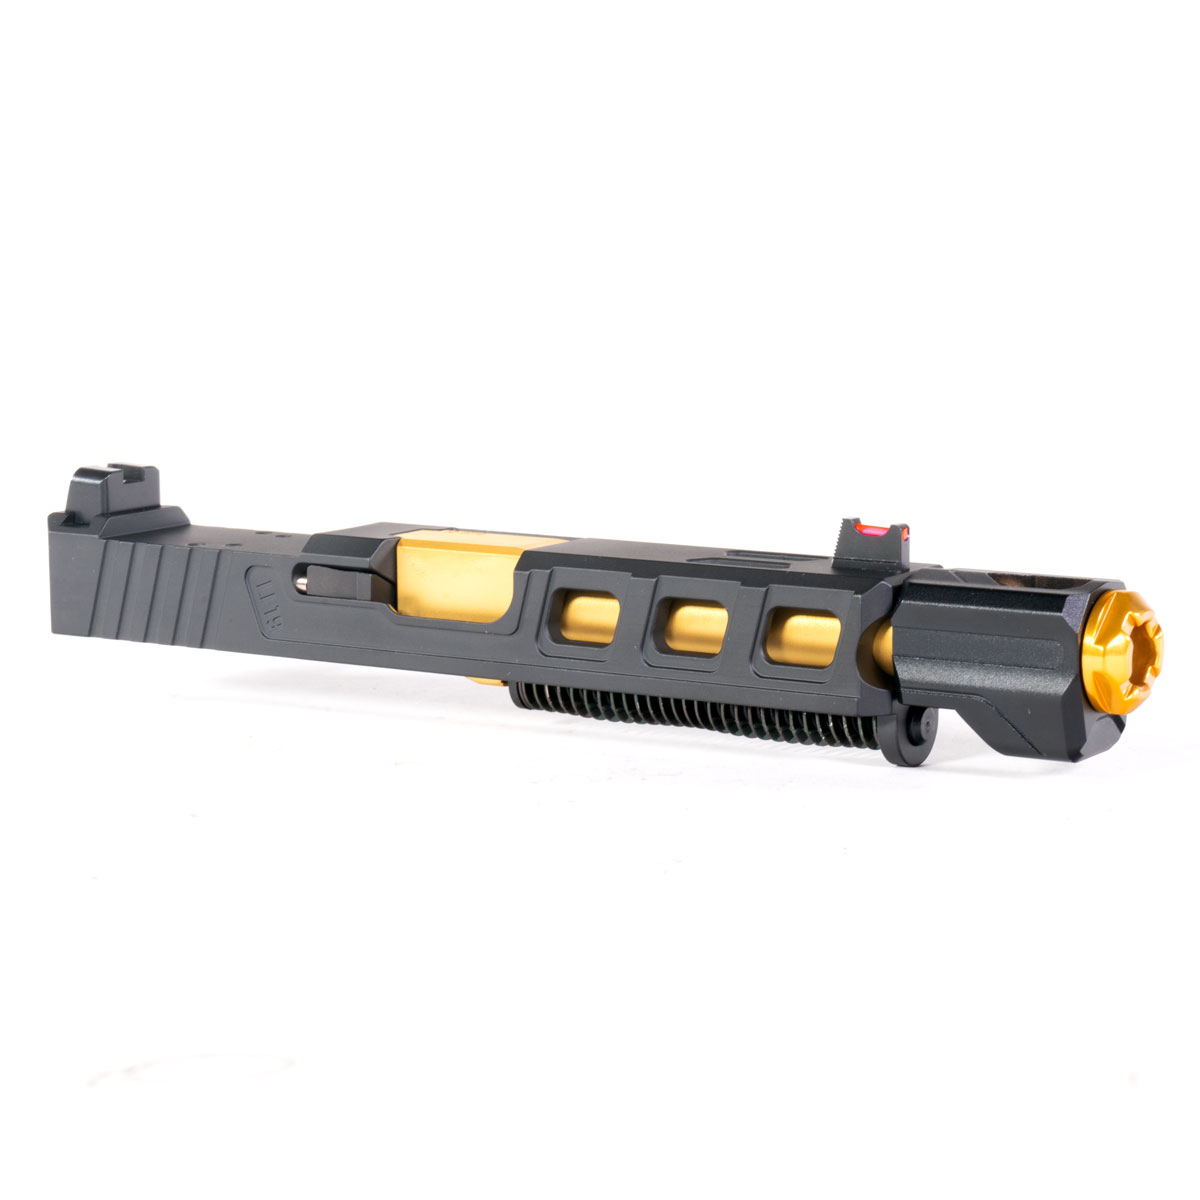 MMC 'Peng w/ Tyrant Designs Compensator' 9mm Complete Slide Kit - Glock 19 Gen 1-3 Compatible